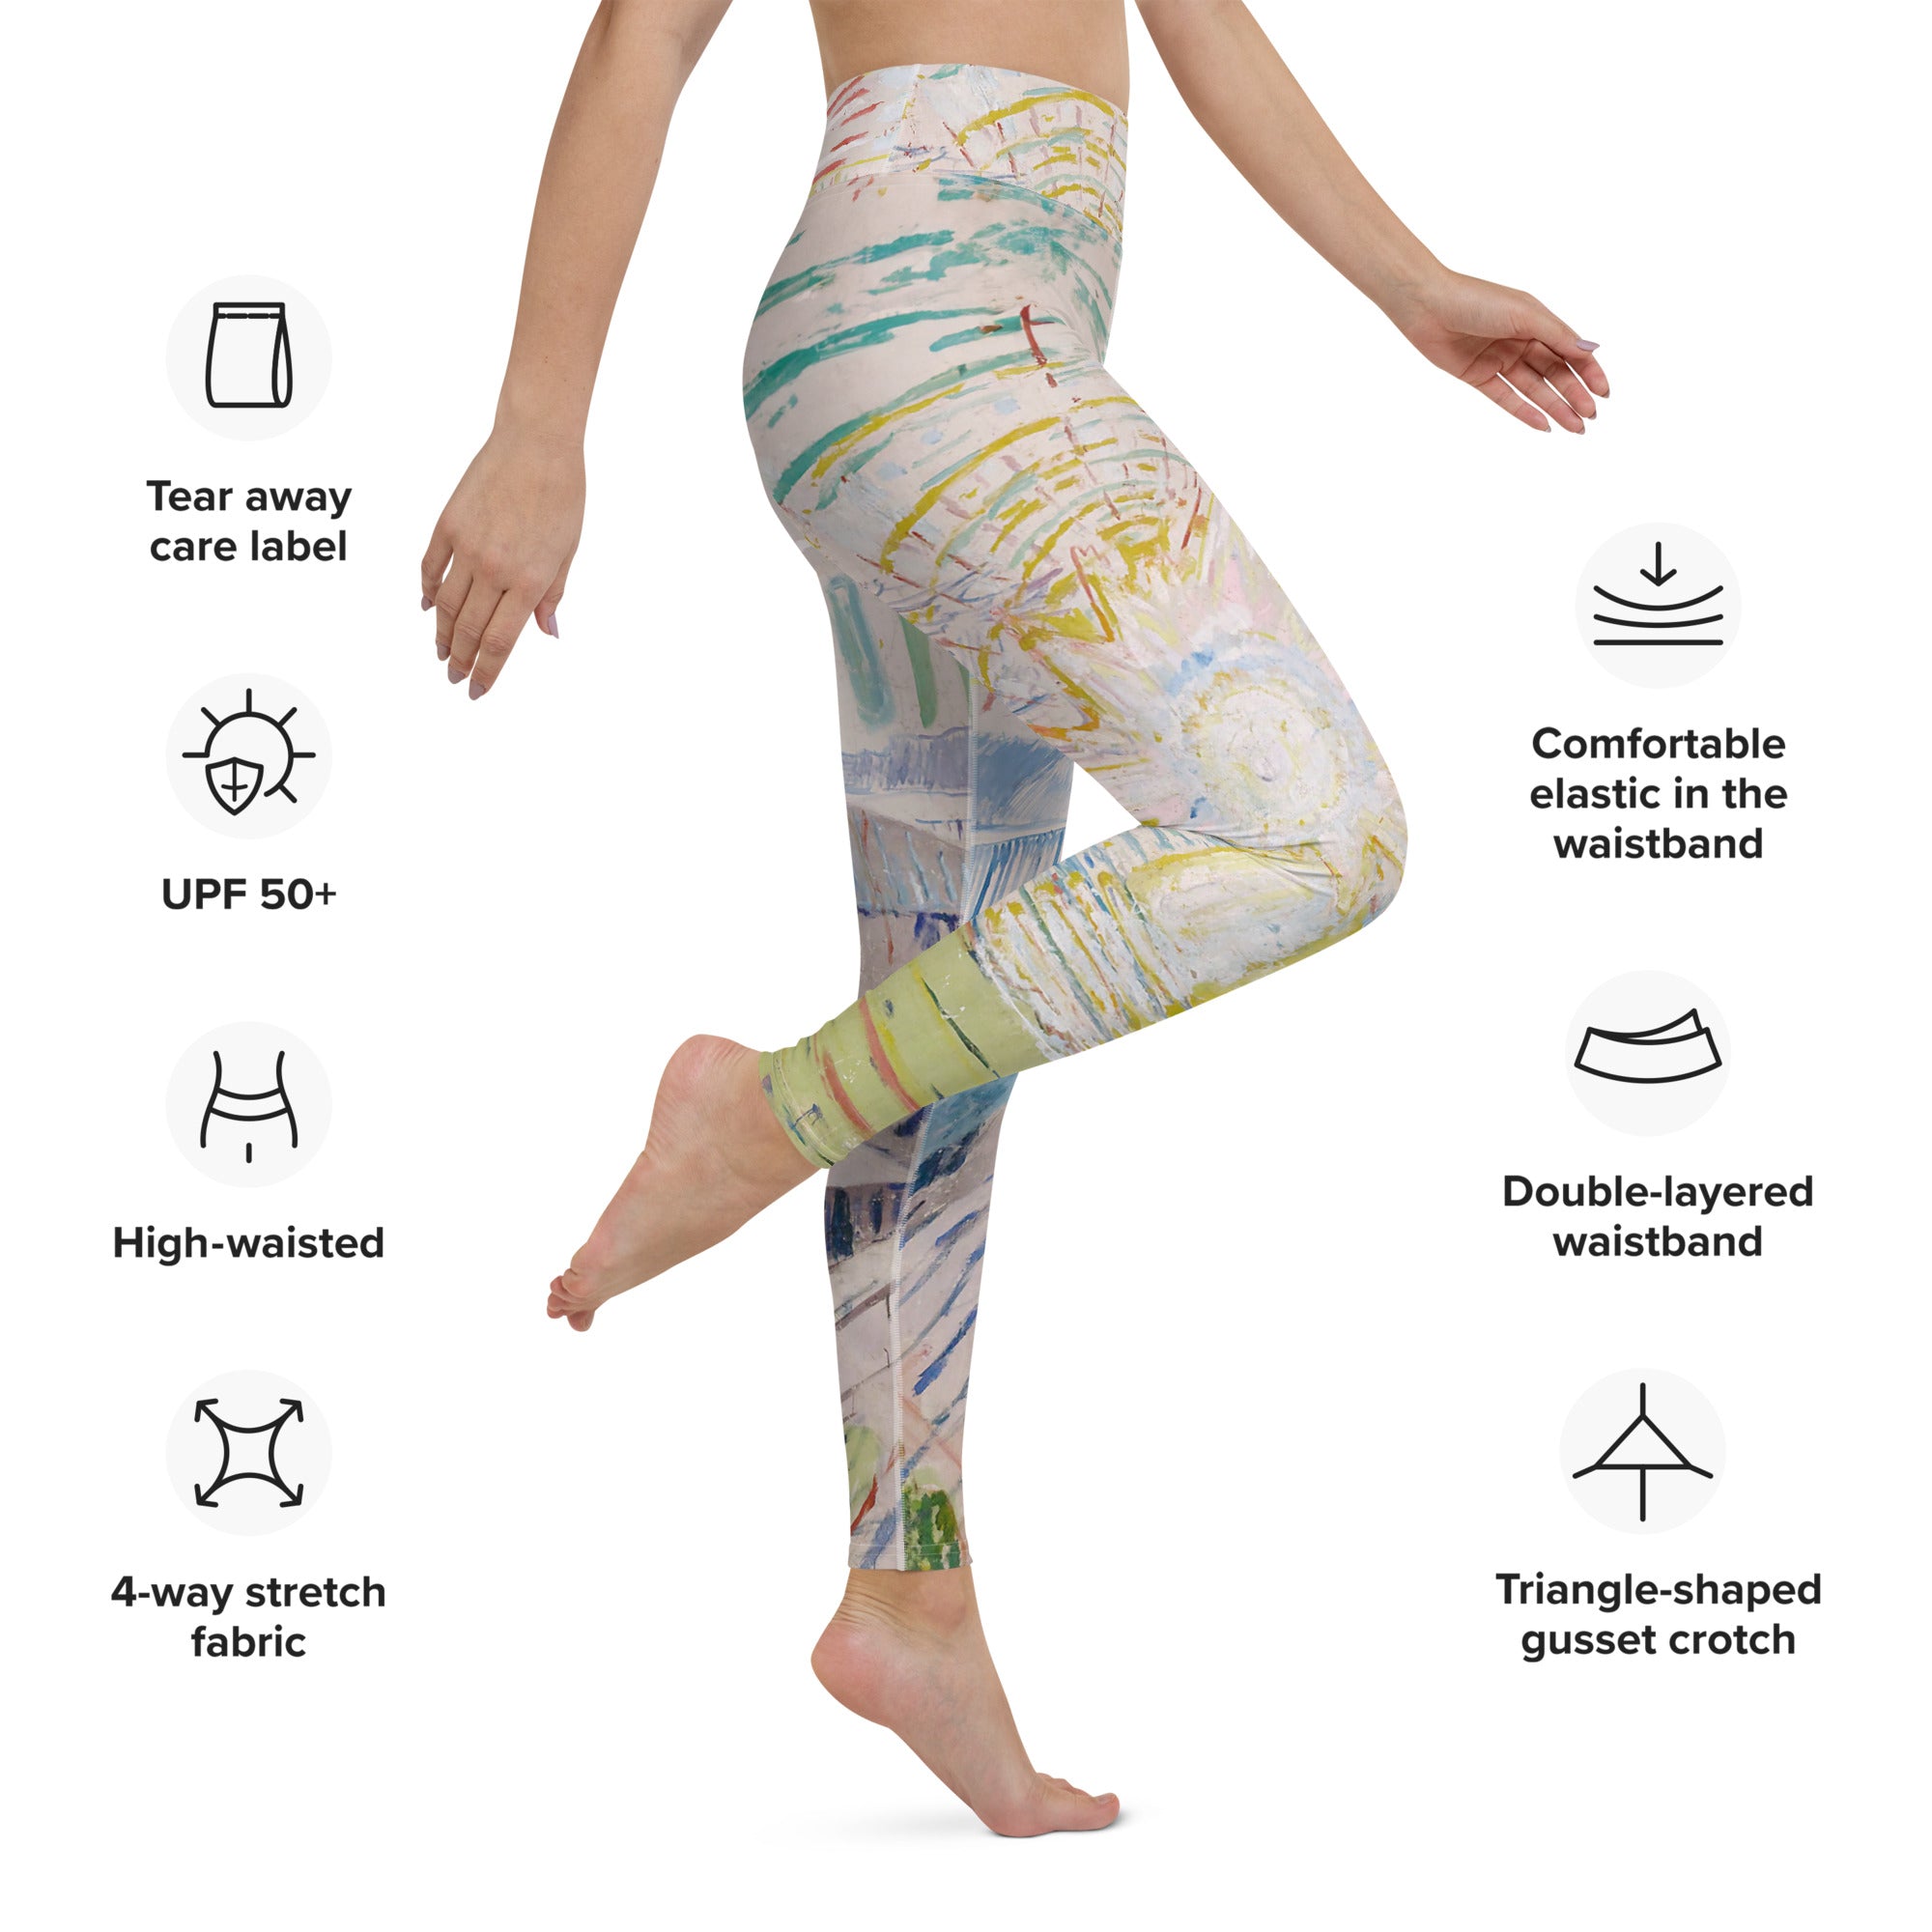 Edvard Munch 'The Sun' Famous Painting Yoga Leggings | Premium Art Yoga Leggings